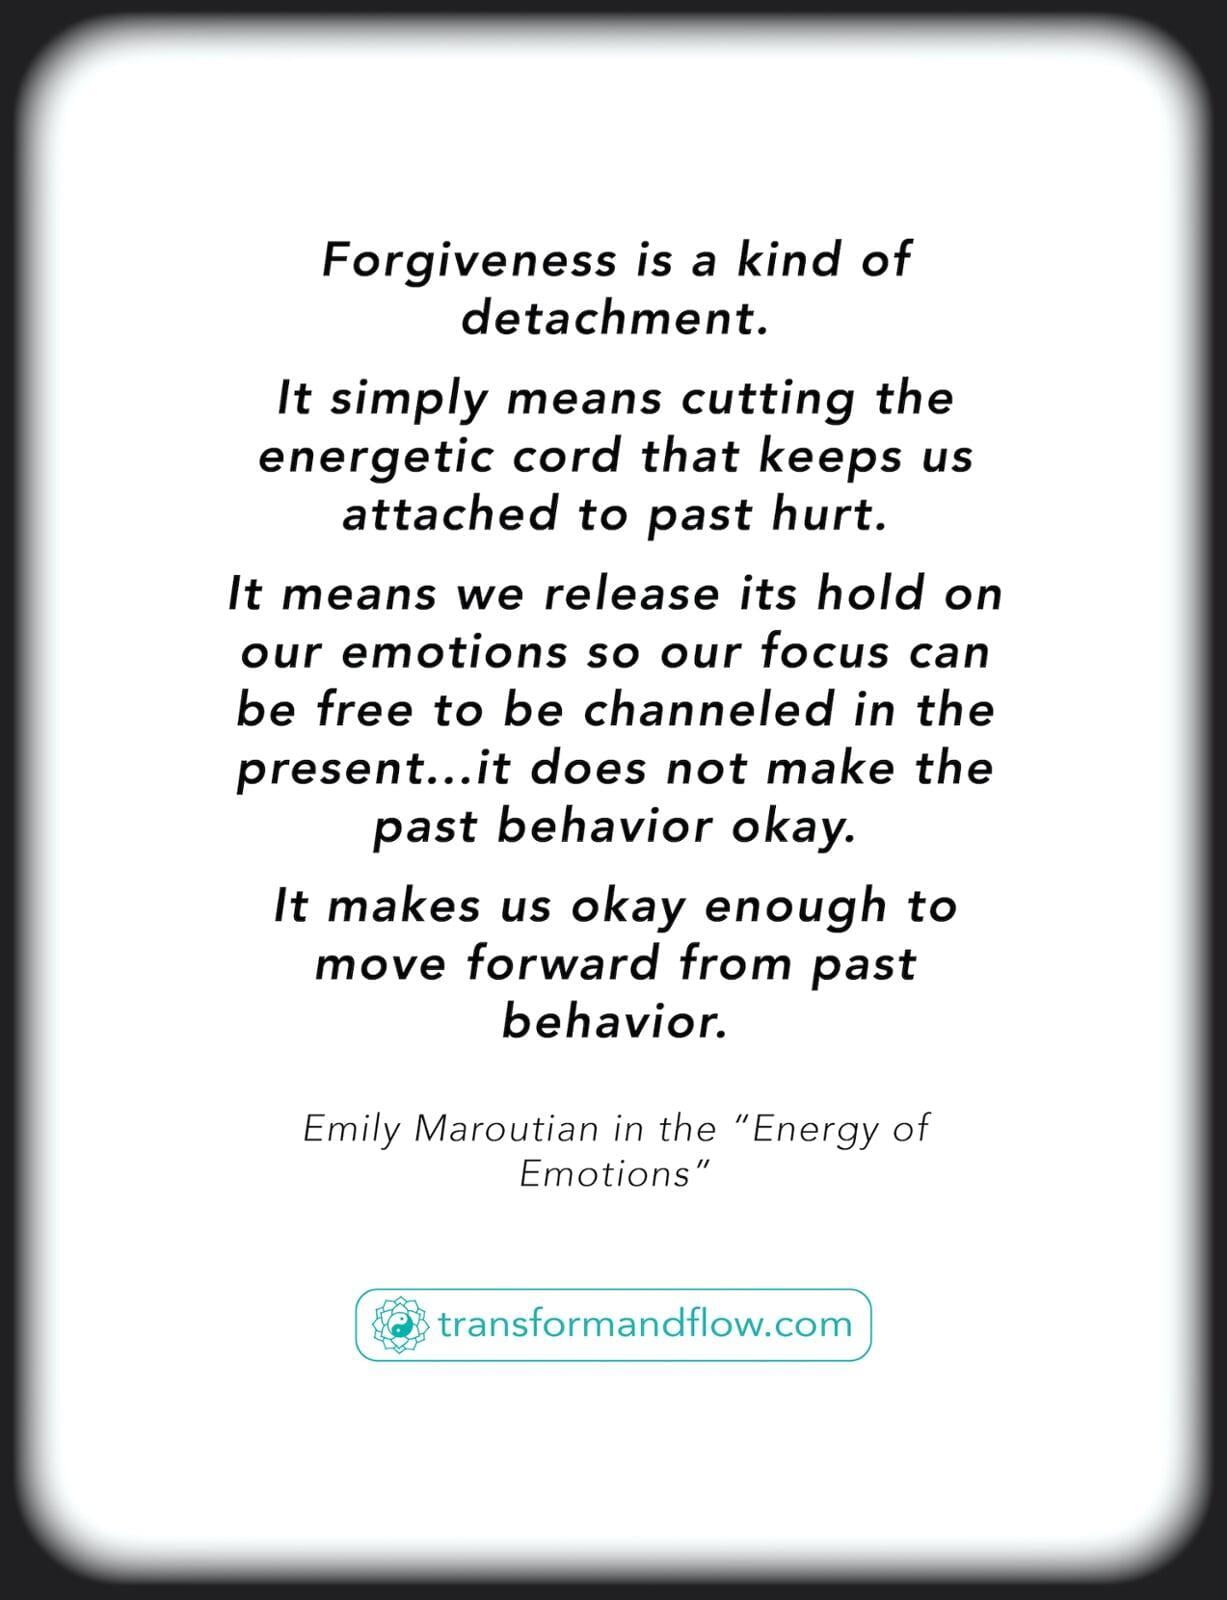 Forgiveness is a kind of detachment